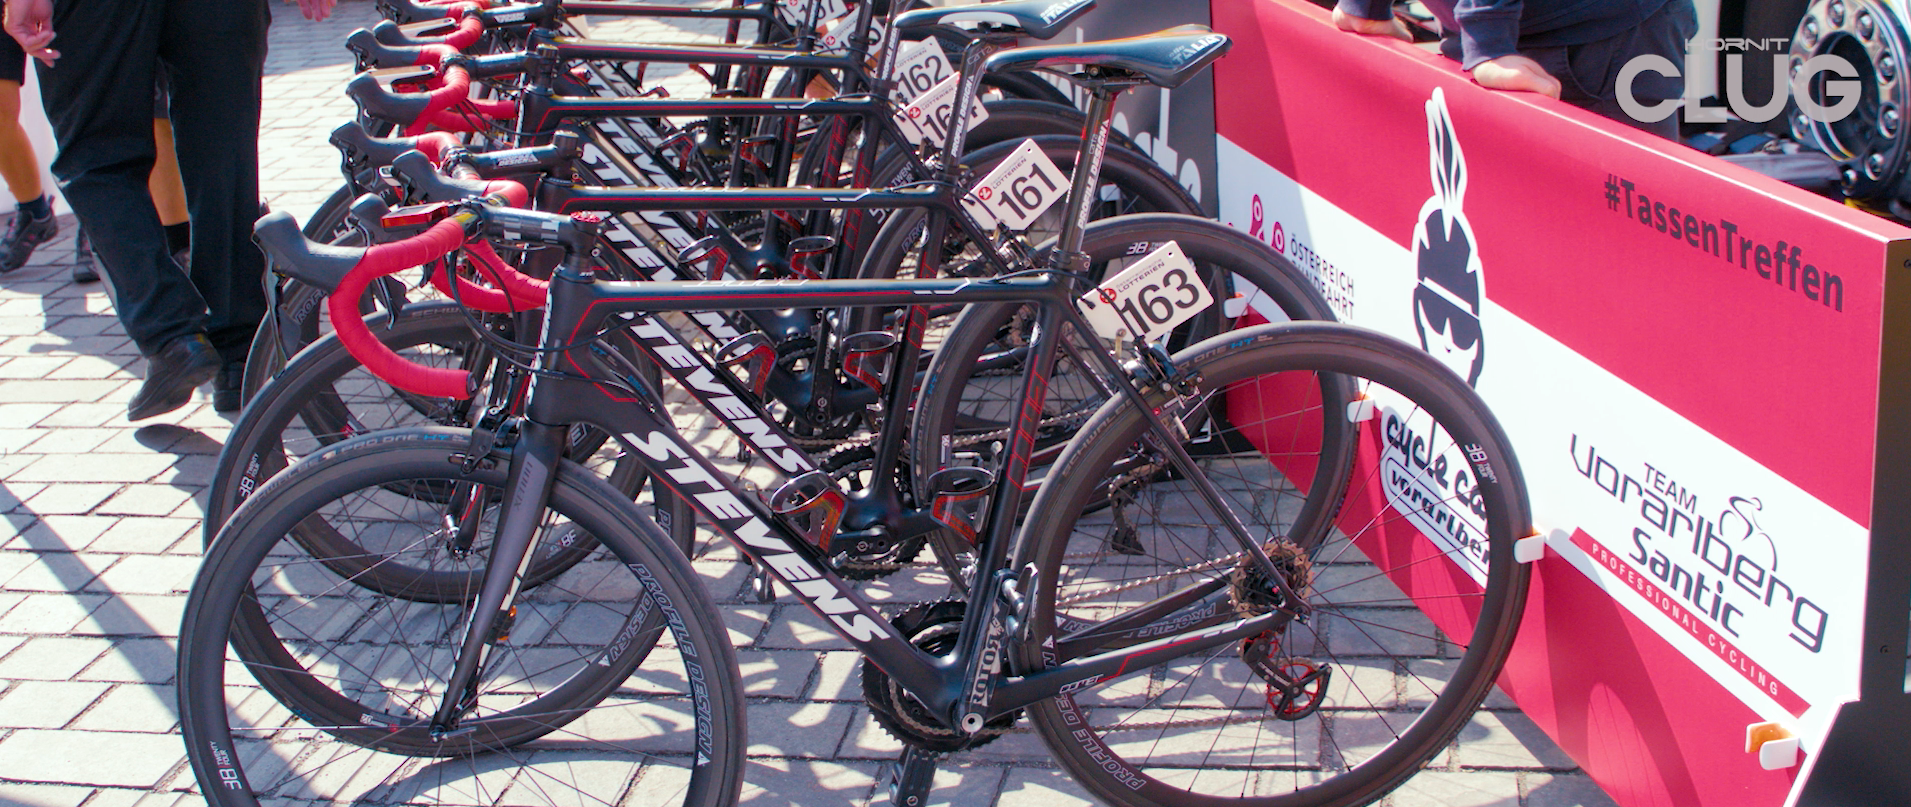 CLUG mtb XL, The World's Smallest Bike Rack